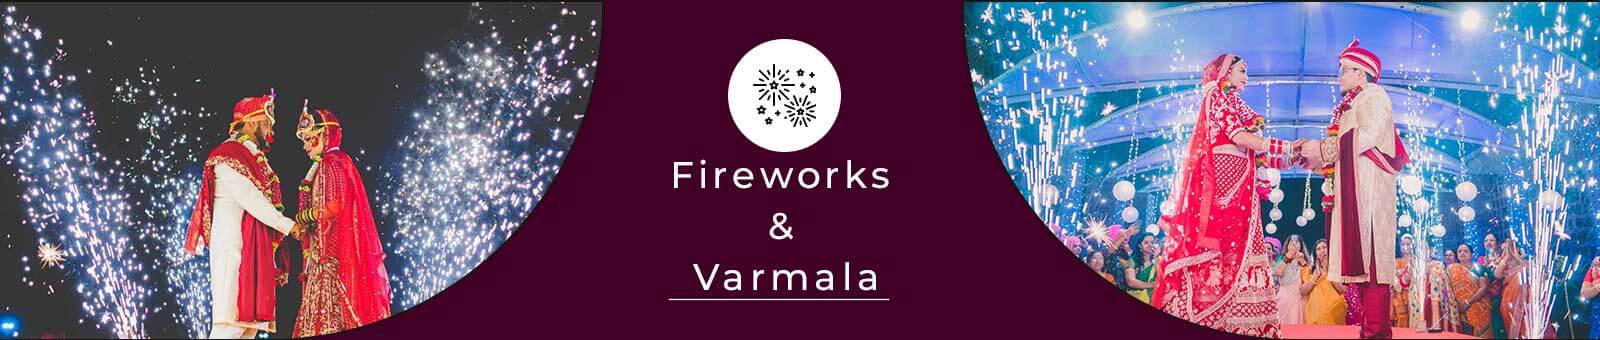 Fireworks & Varmala